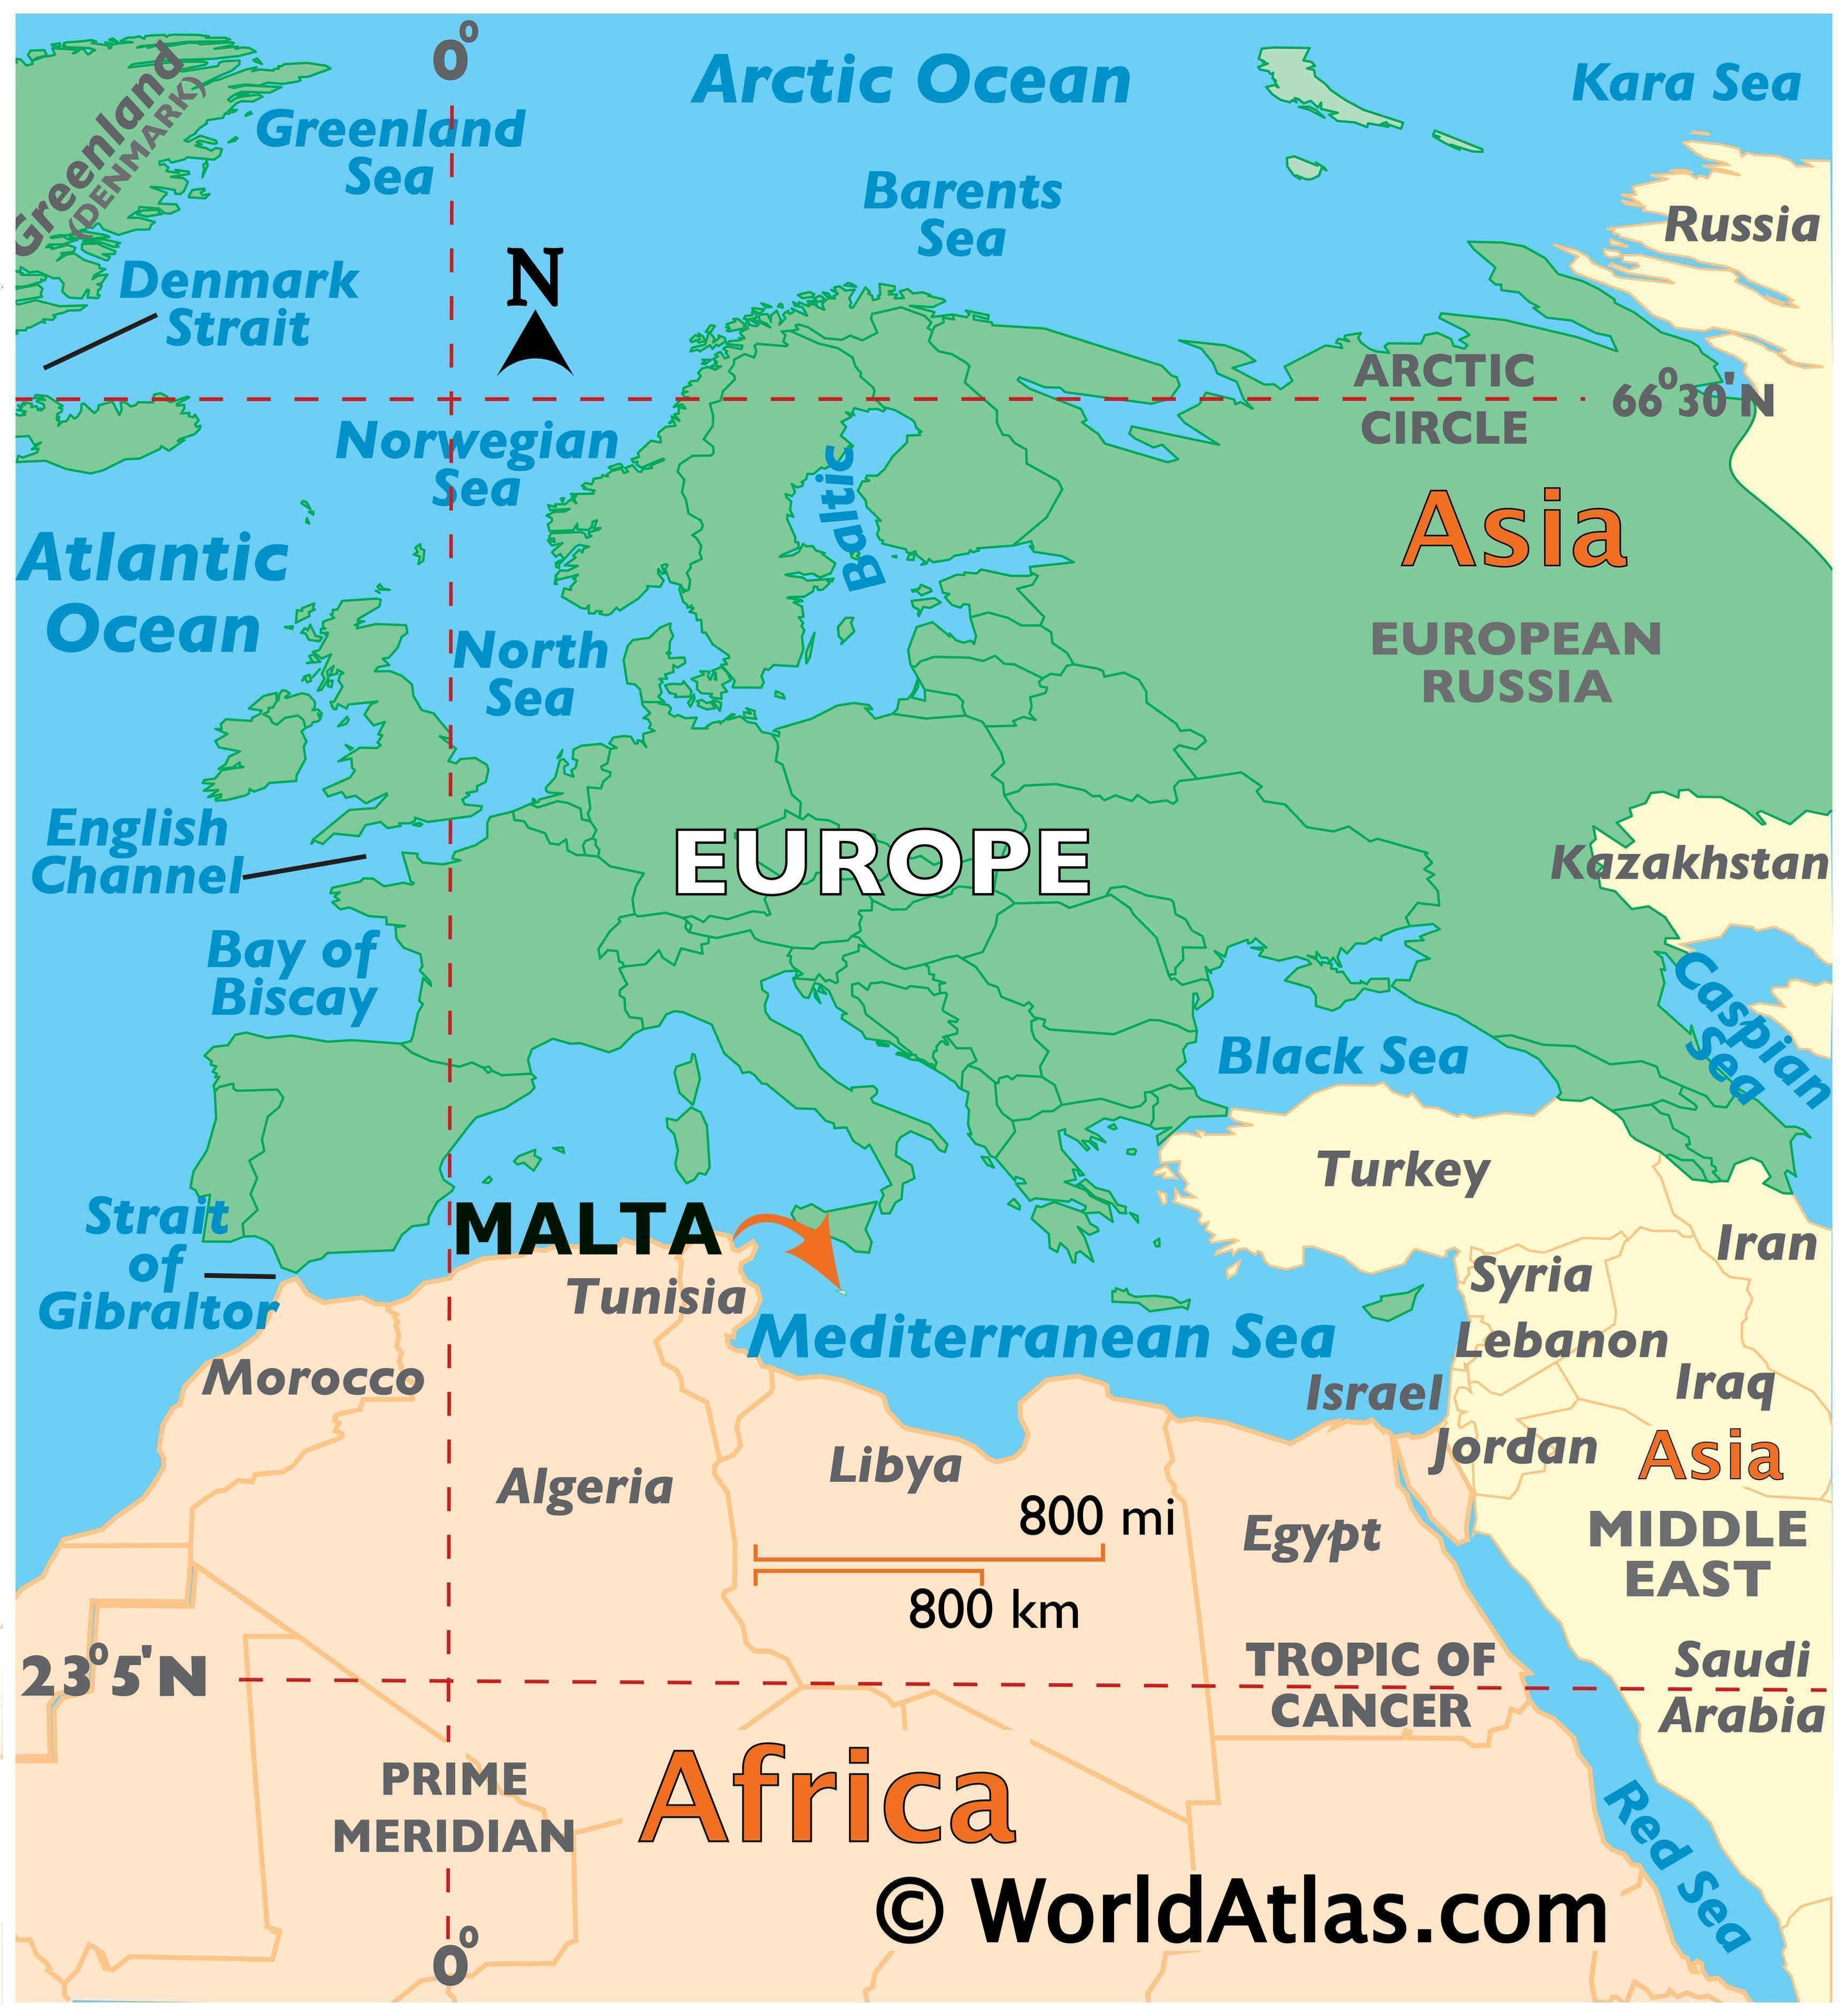 Malta Map Geography Of Malta Map Of Malta Worldatlas Com